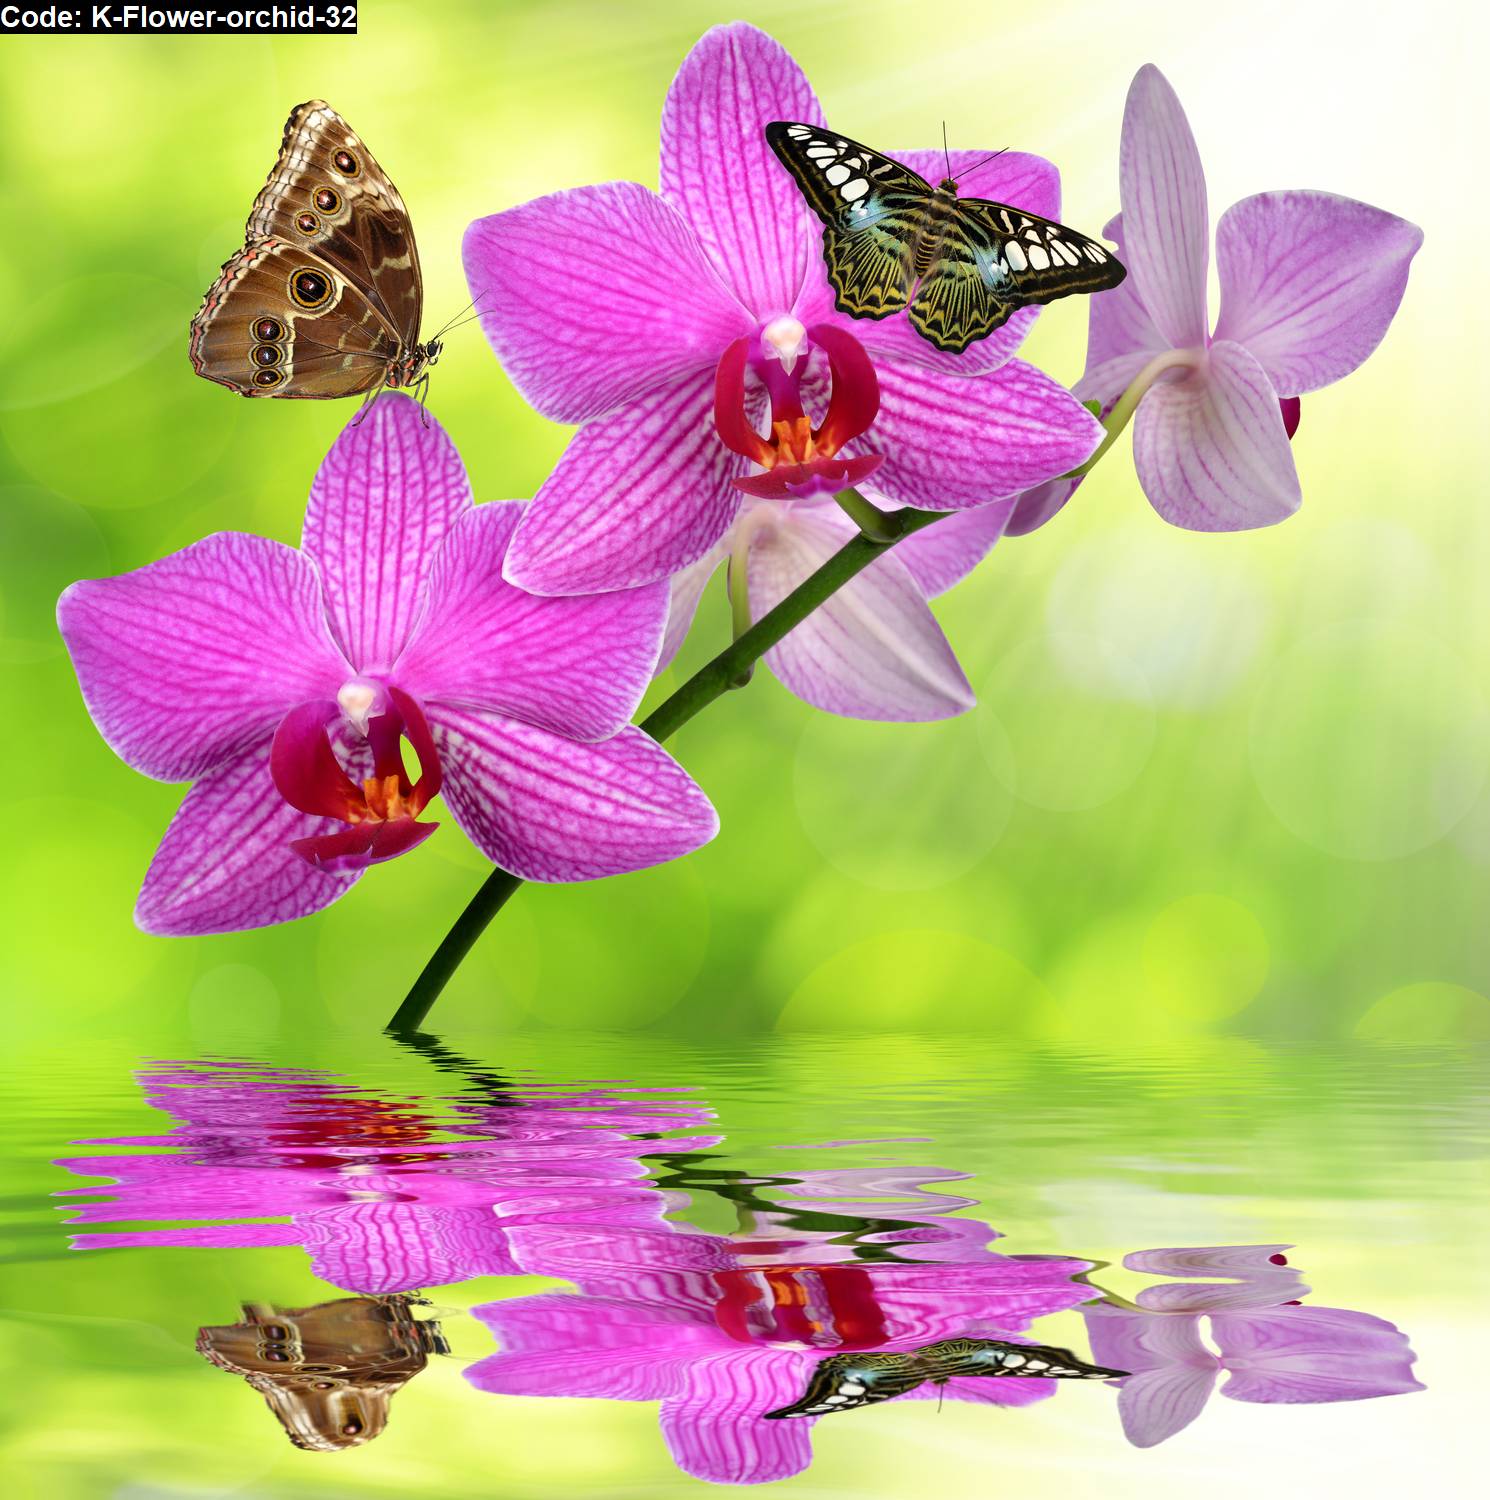  Flower  orchid 32 Jual hiasan  dinding